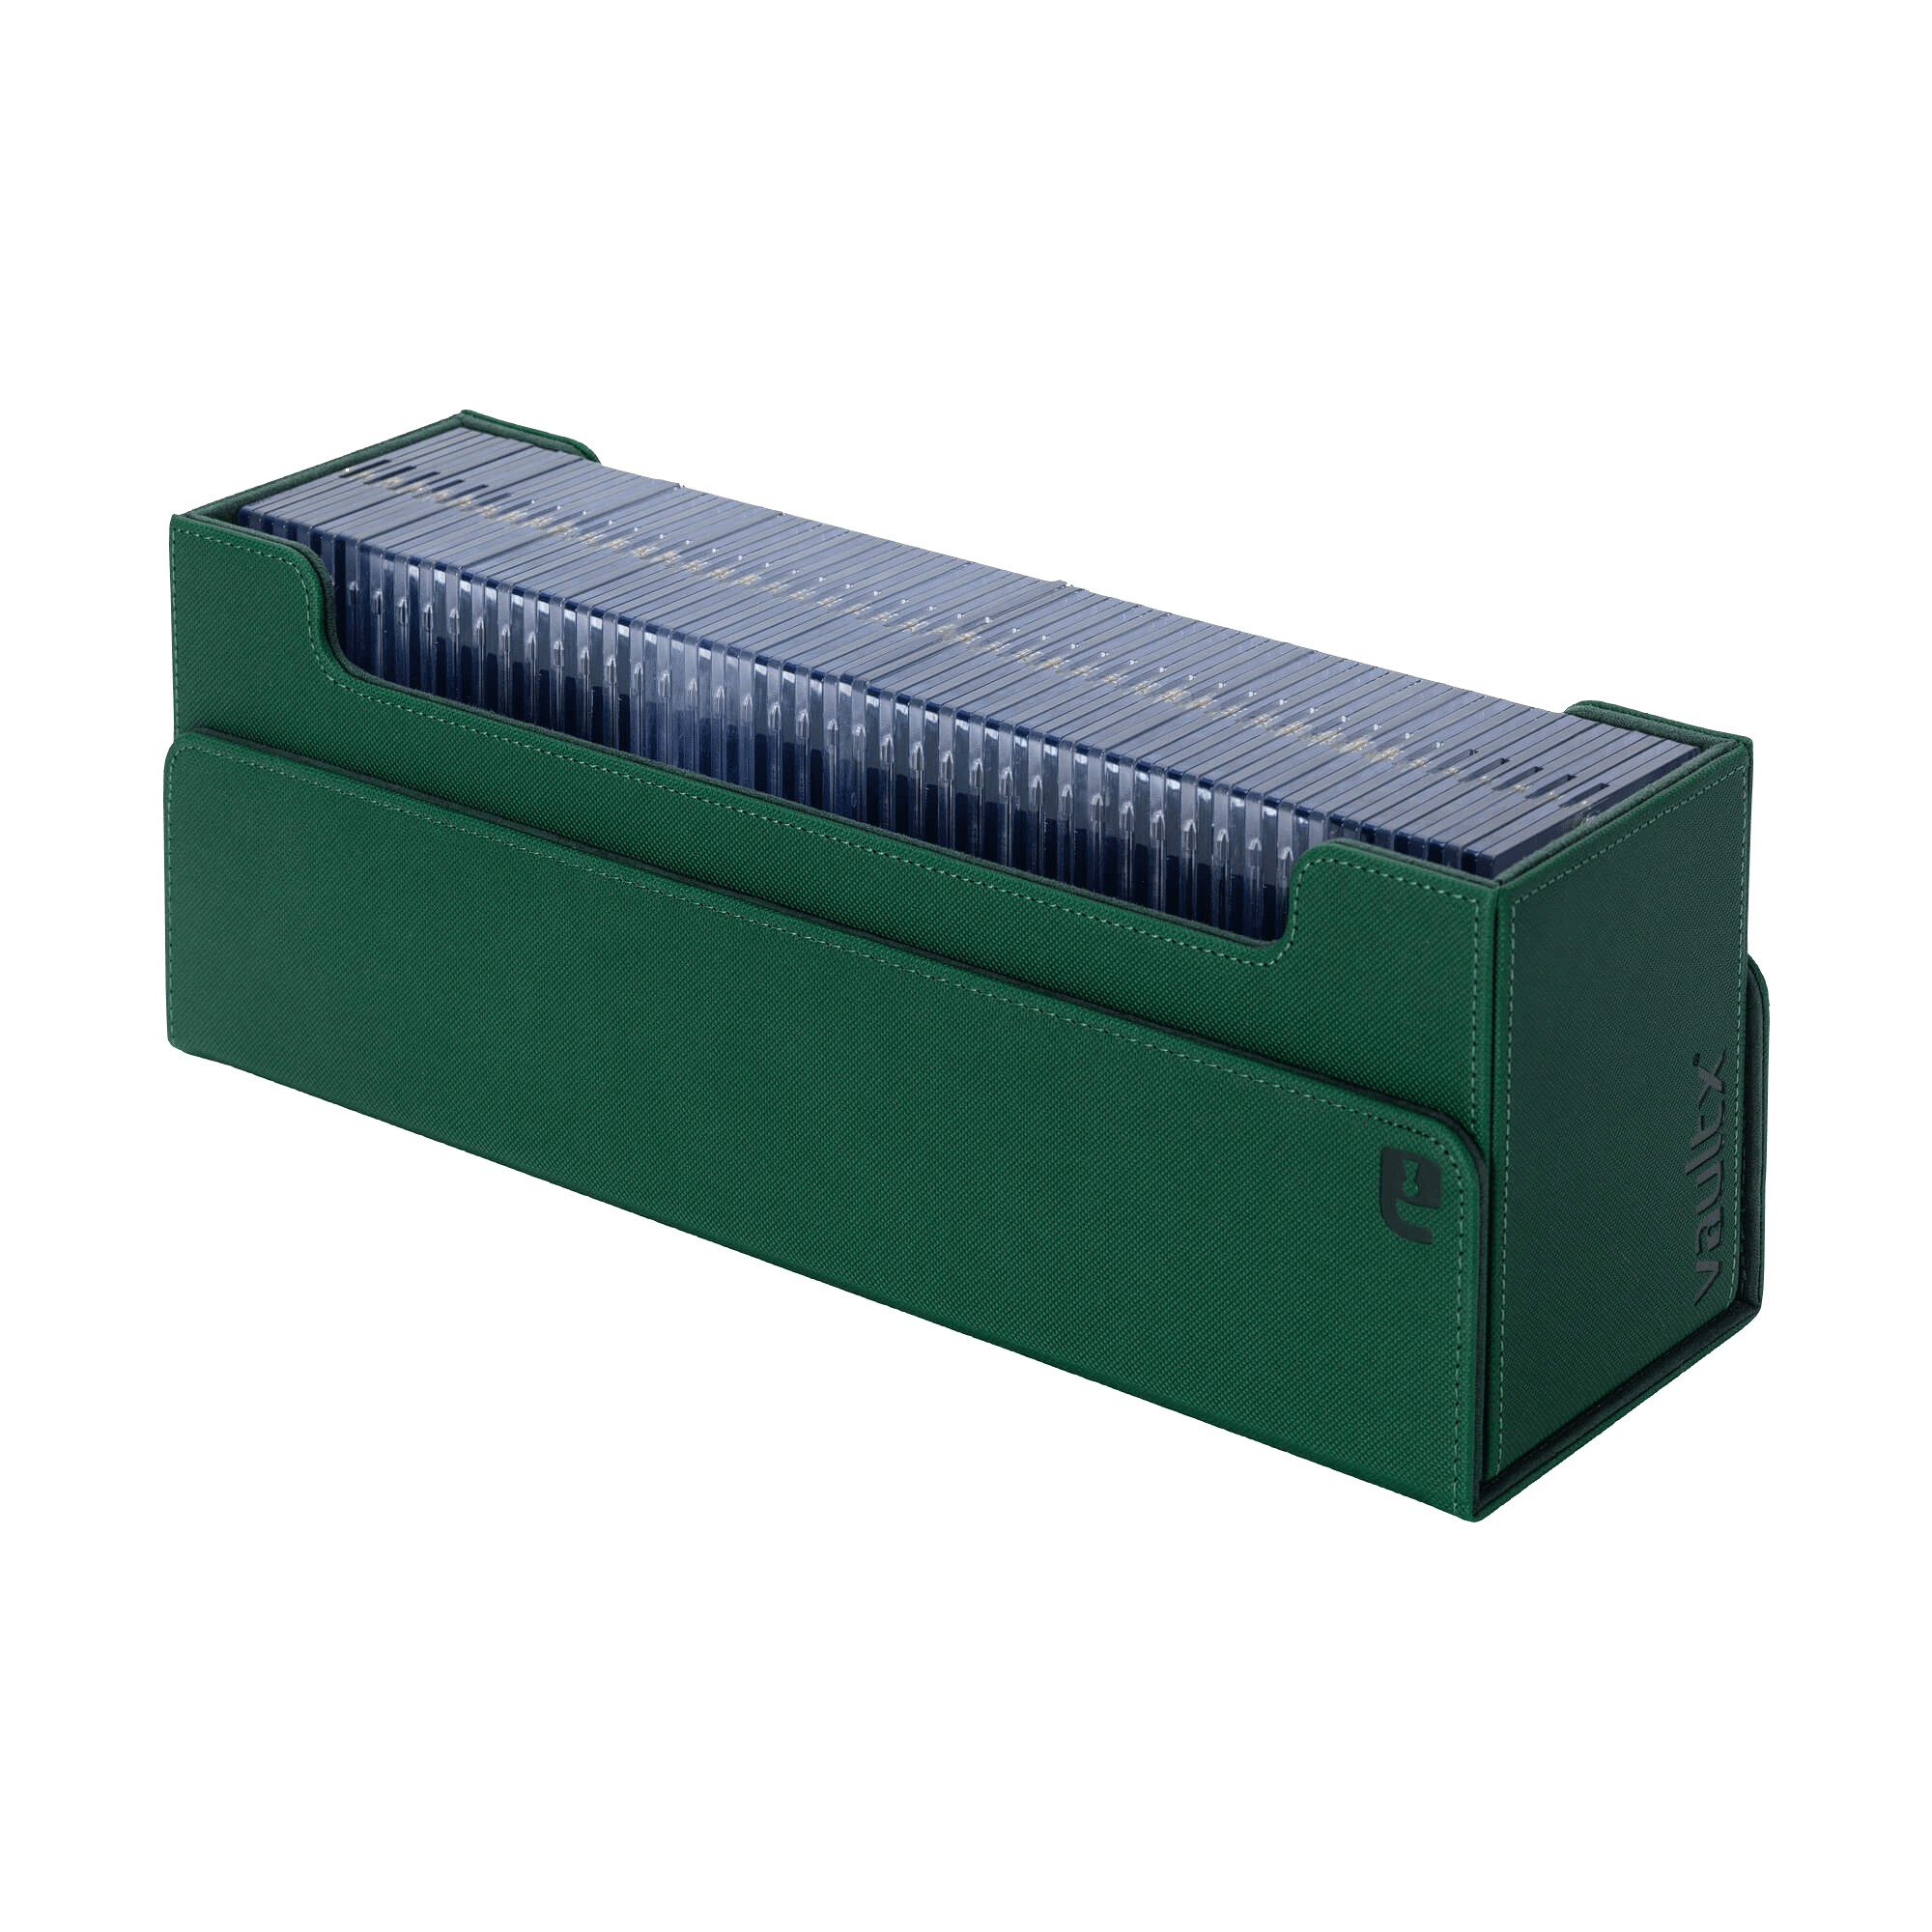 Vault X - Exo-Tec® Card Box 450+ - Green - The Card Vault